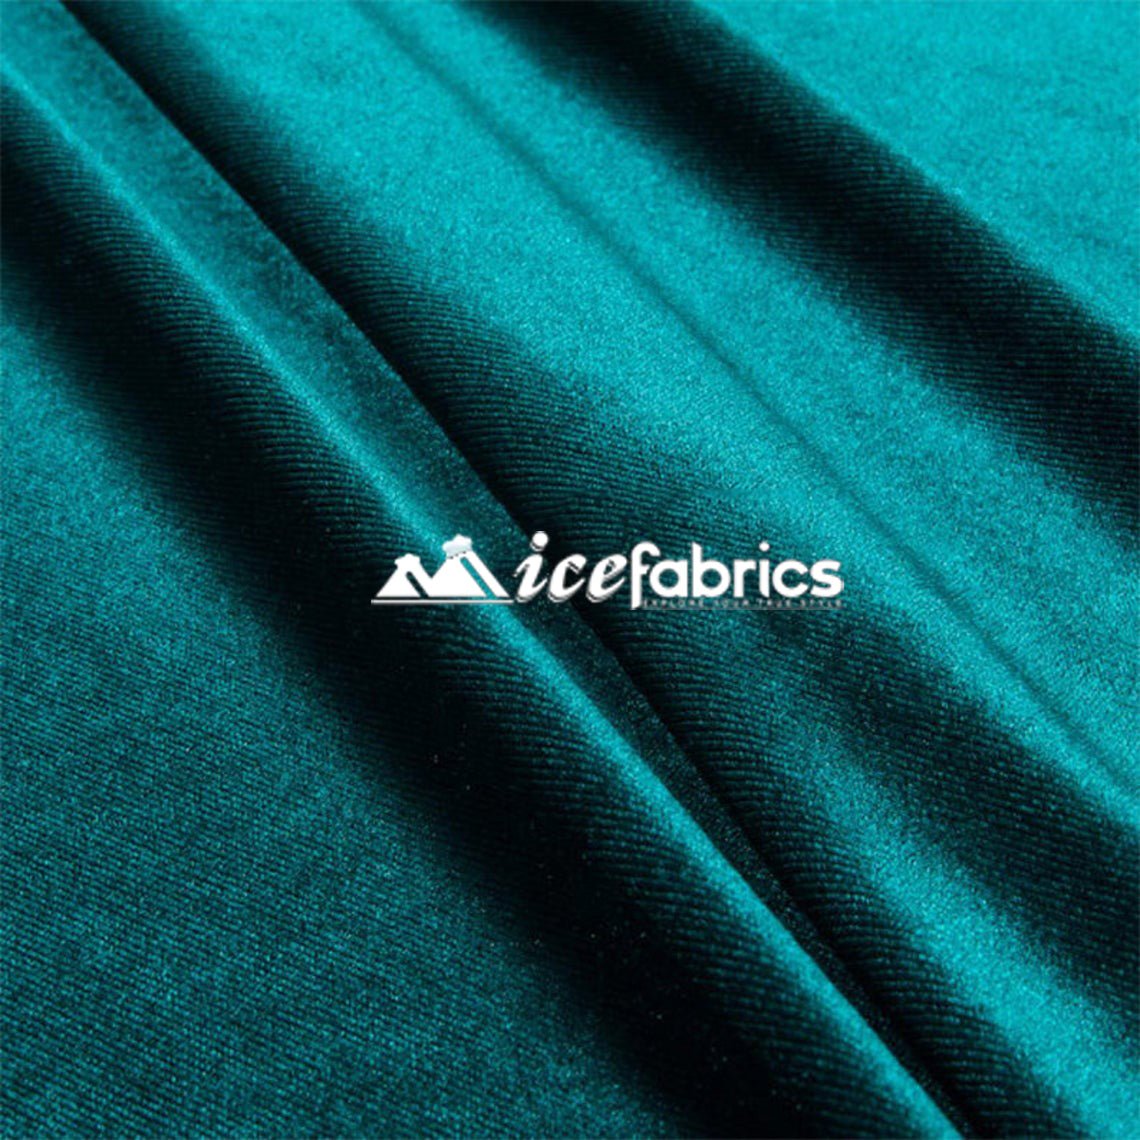 Teal Green Velvet Fabric | 4 Way Stretch SpandexVelvet FabricICE FABRICSICE FABRICSTeal Green Velvet Fabric | 4 Way Stretch Spandex ICE FABRICS